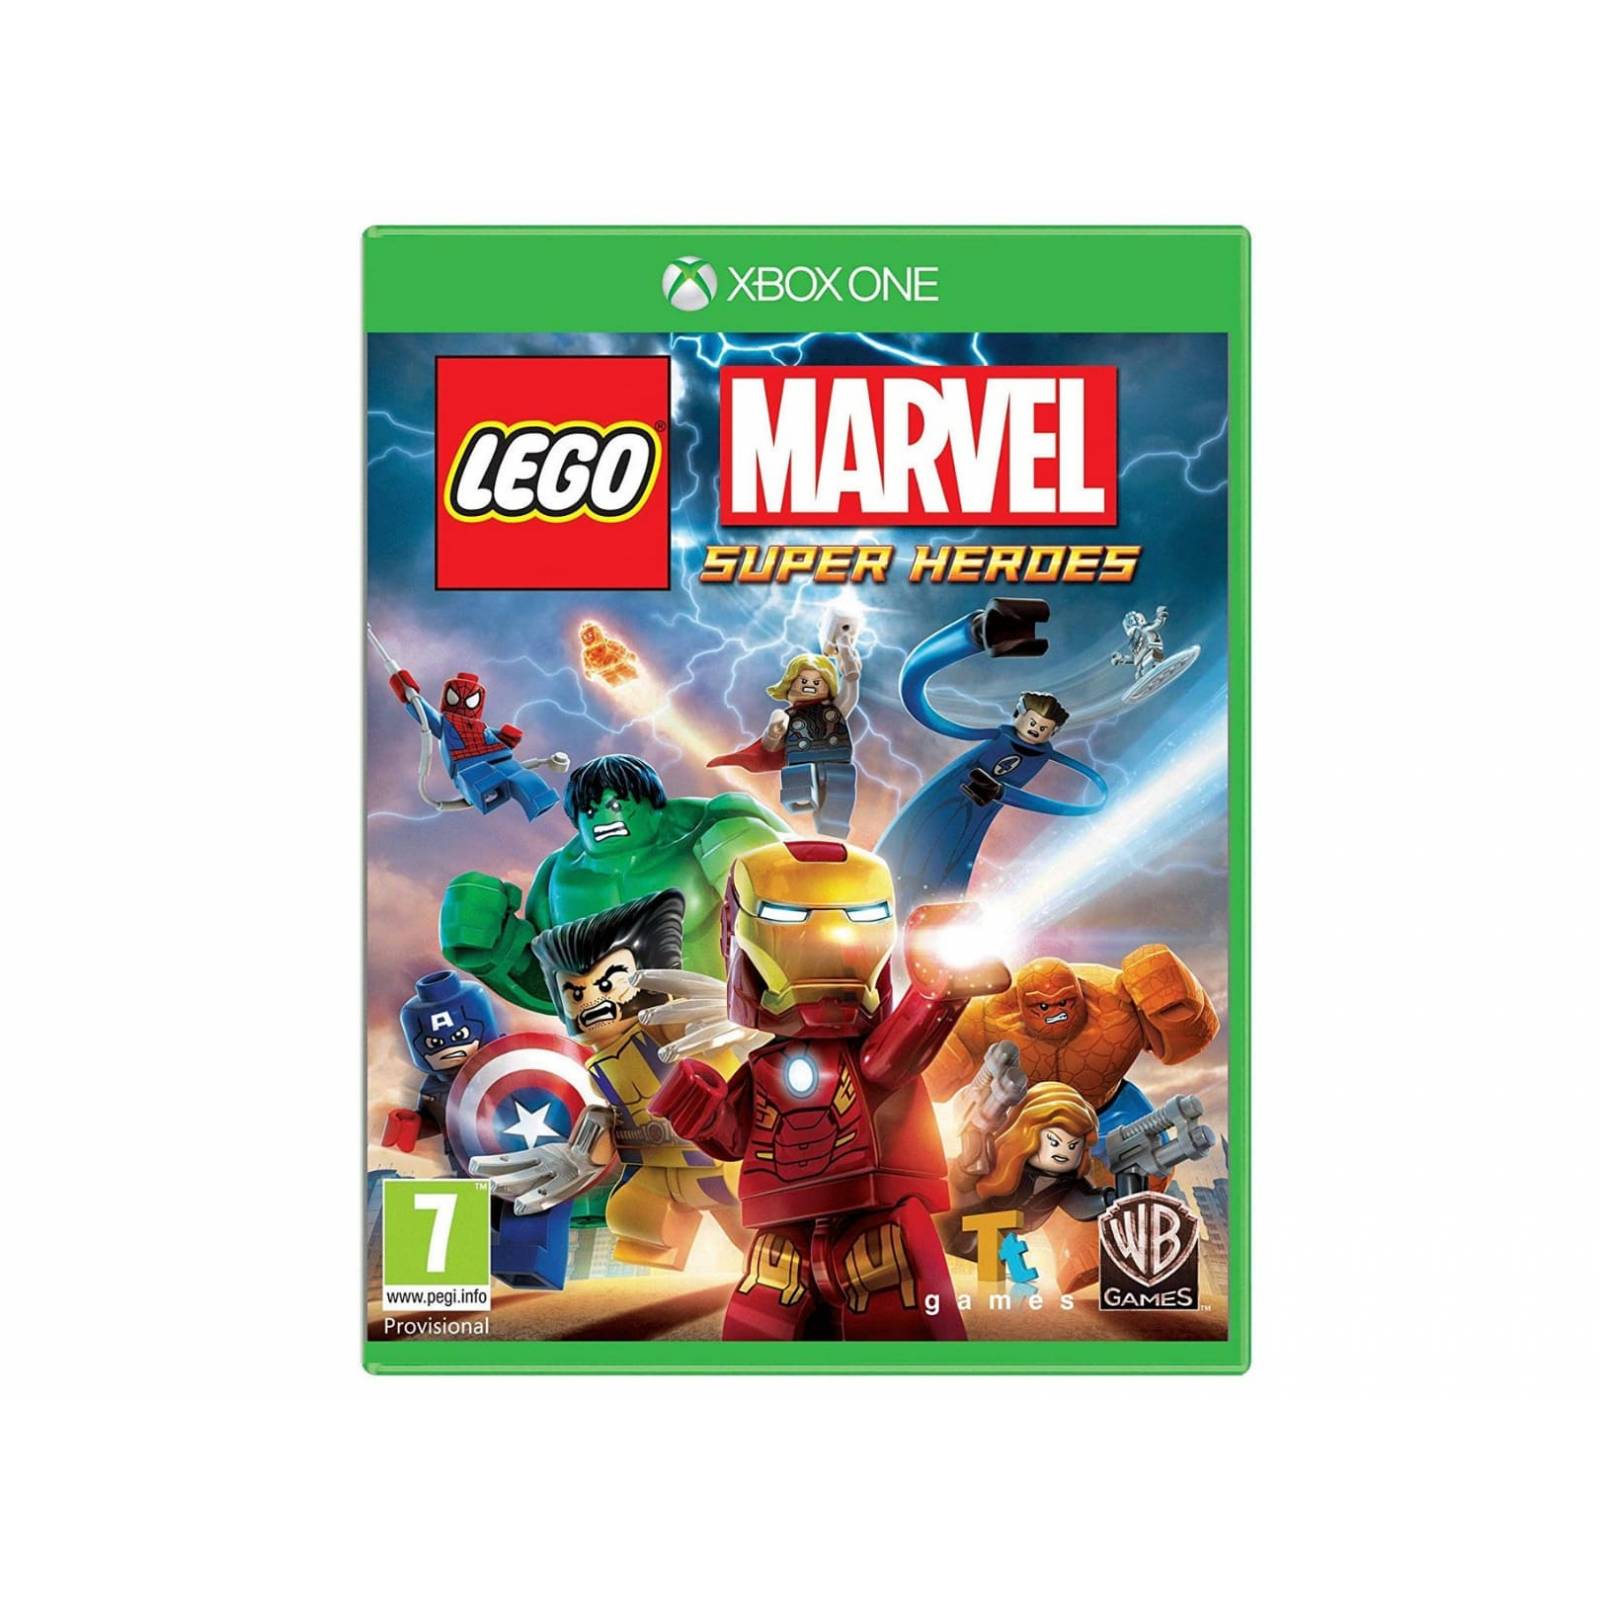 LEGO MARVEL SUPER HEROES Xbox one